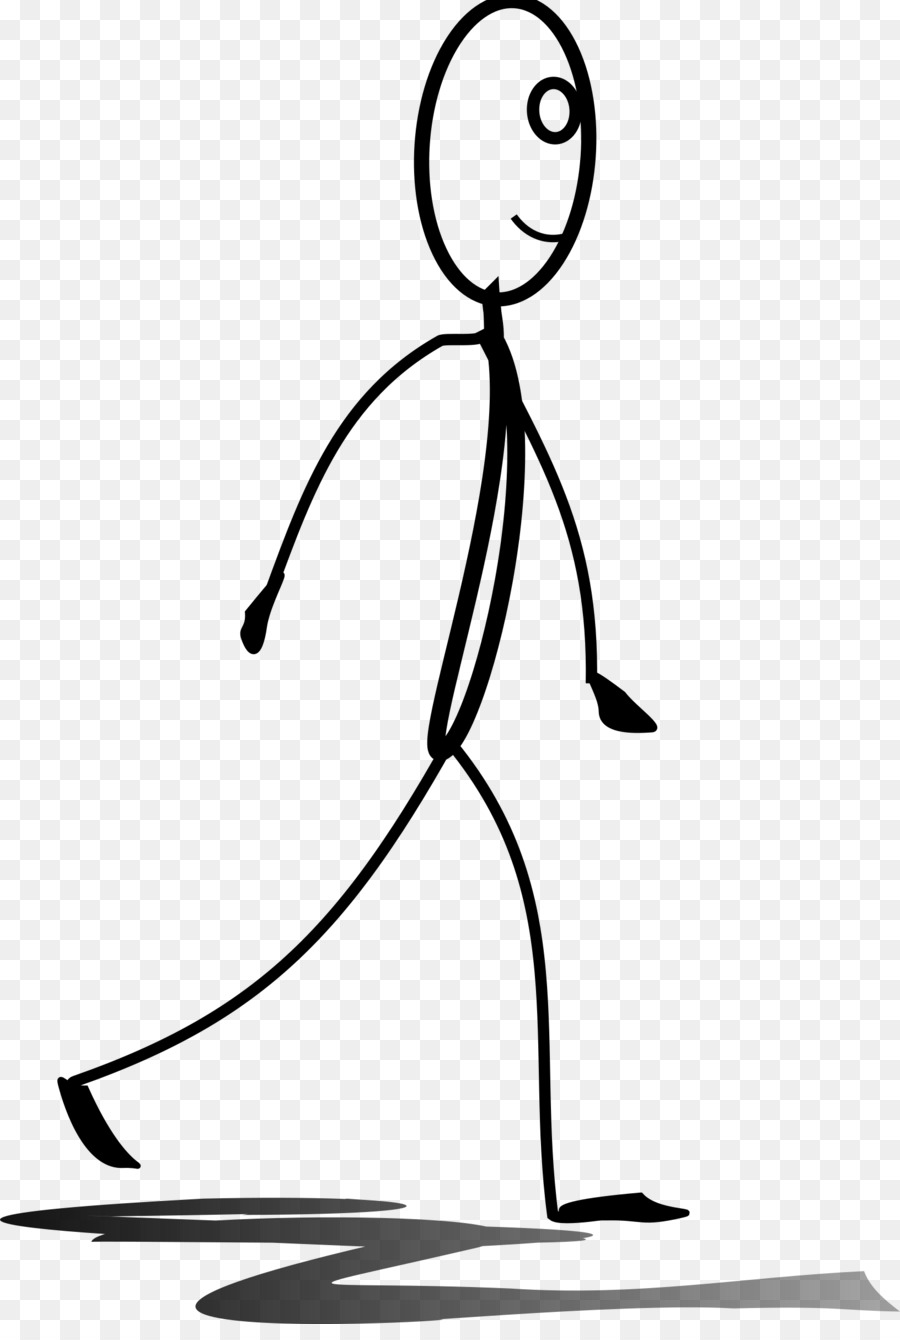 Stick figure Animation Walking Clip art - running man png download - 1632*2400 - Free Transparent Stick Figure png Download.